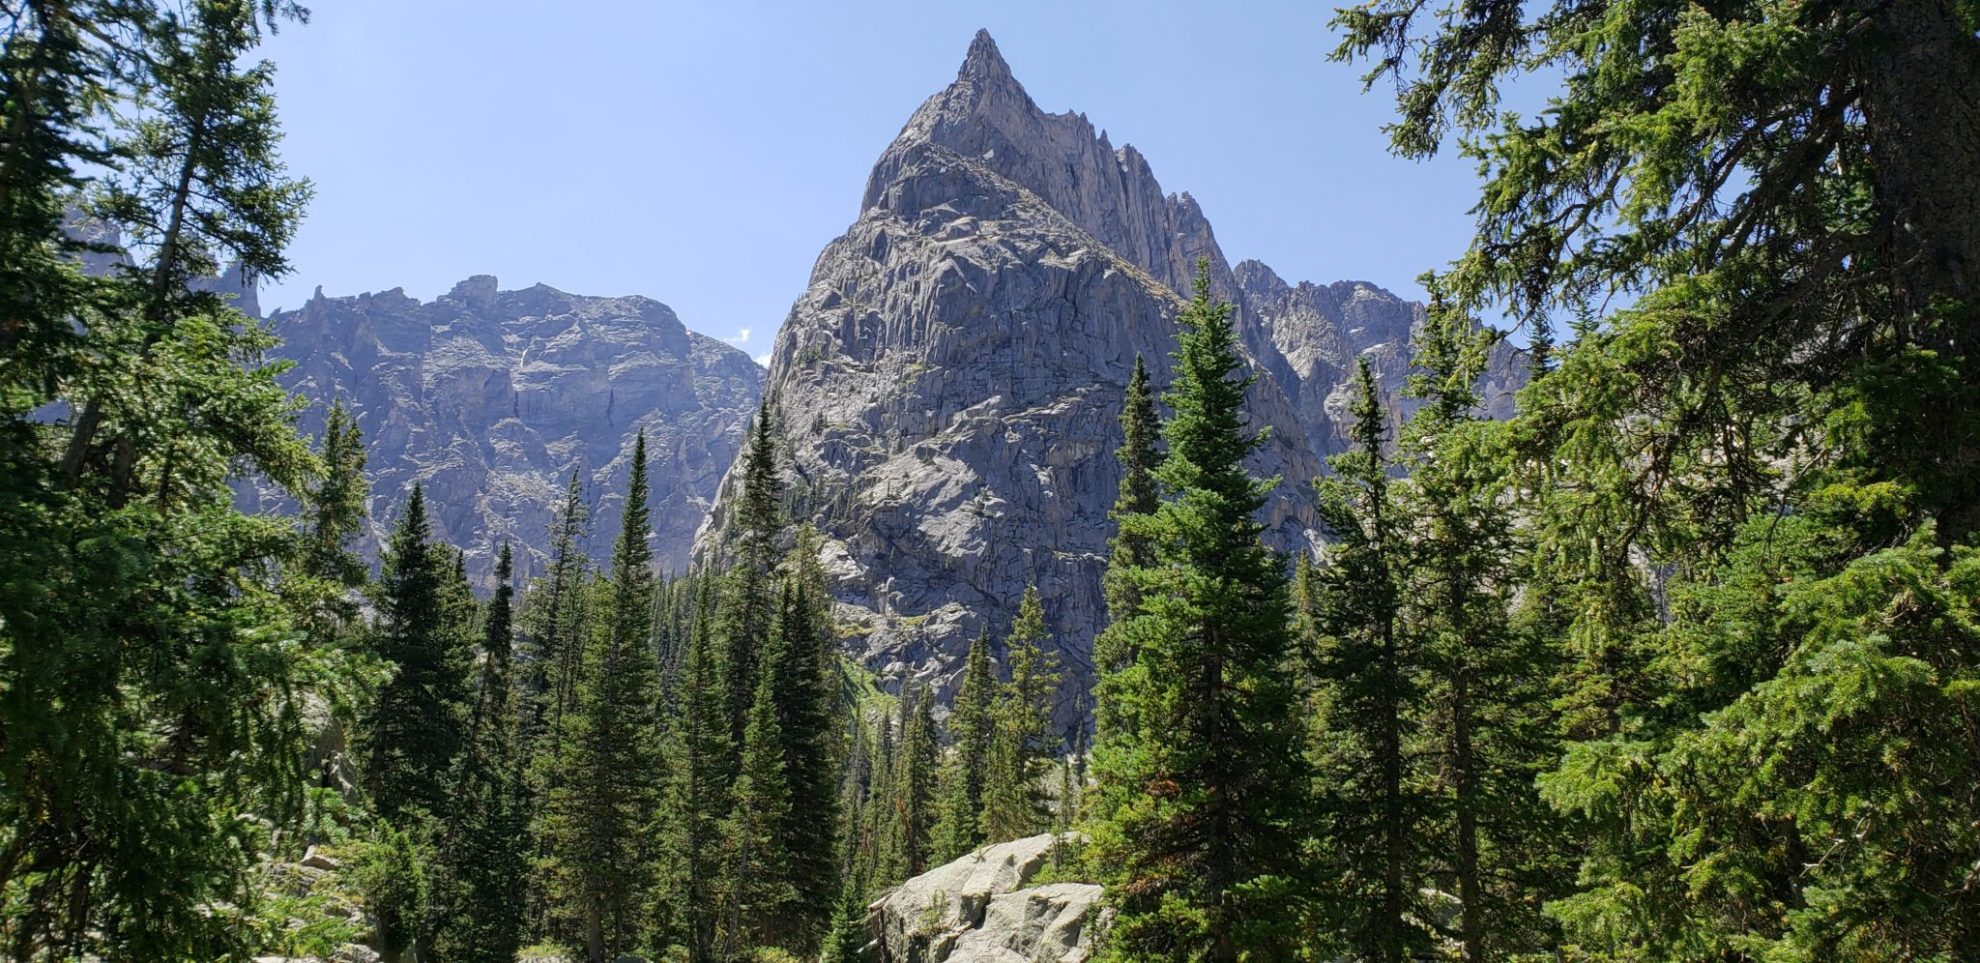 View of Lone Eagle Peak